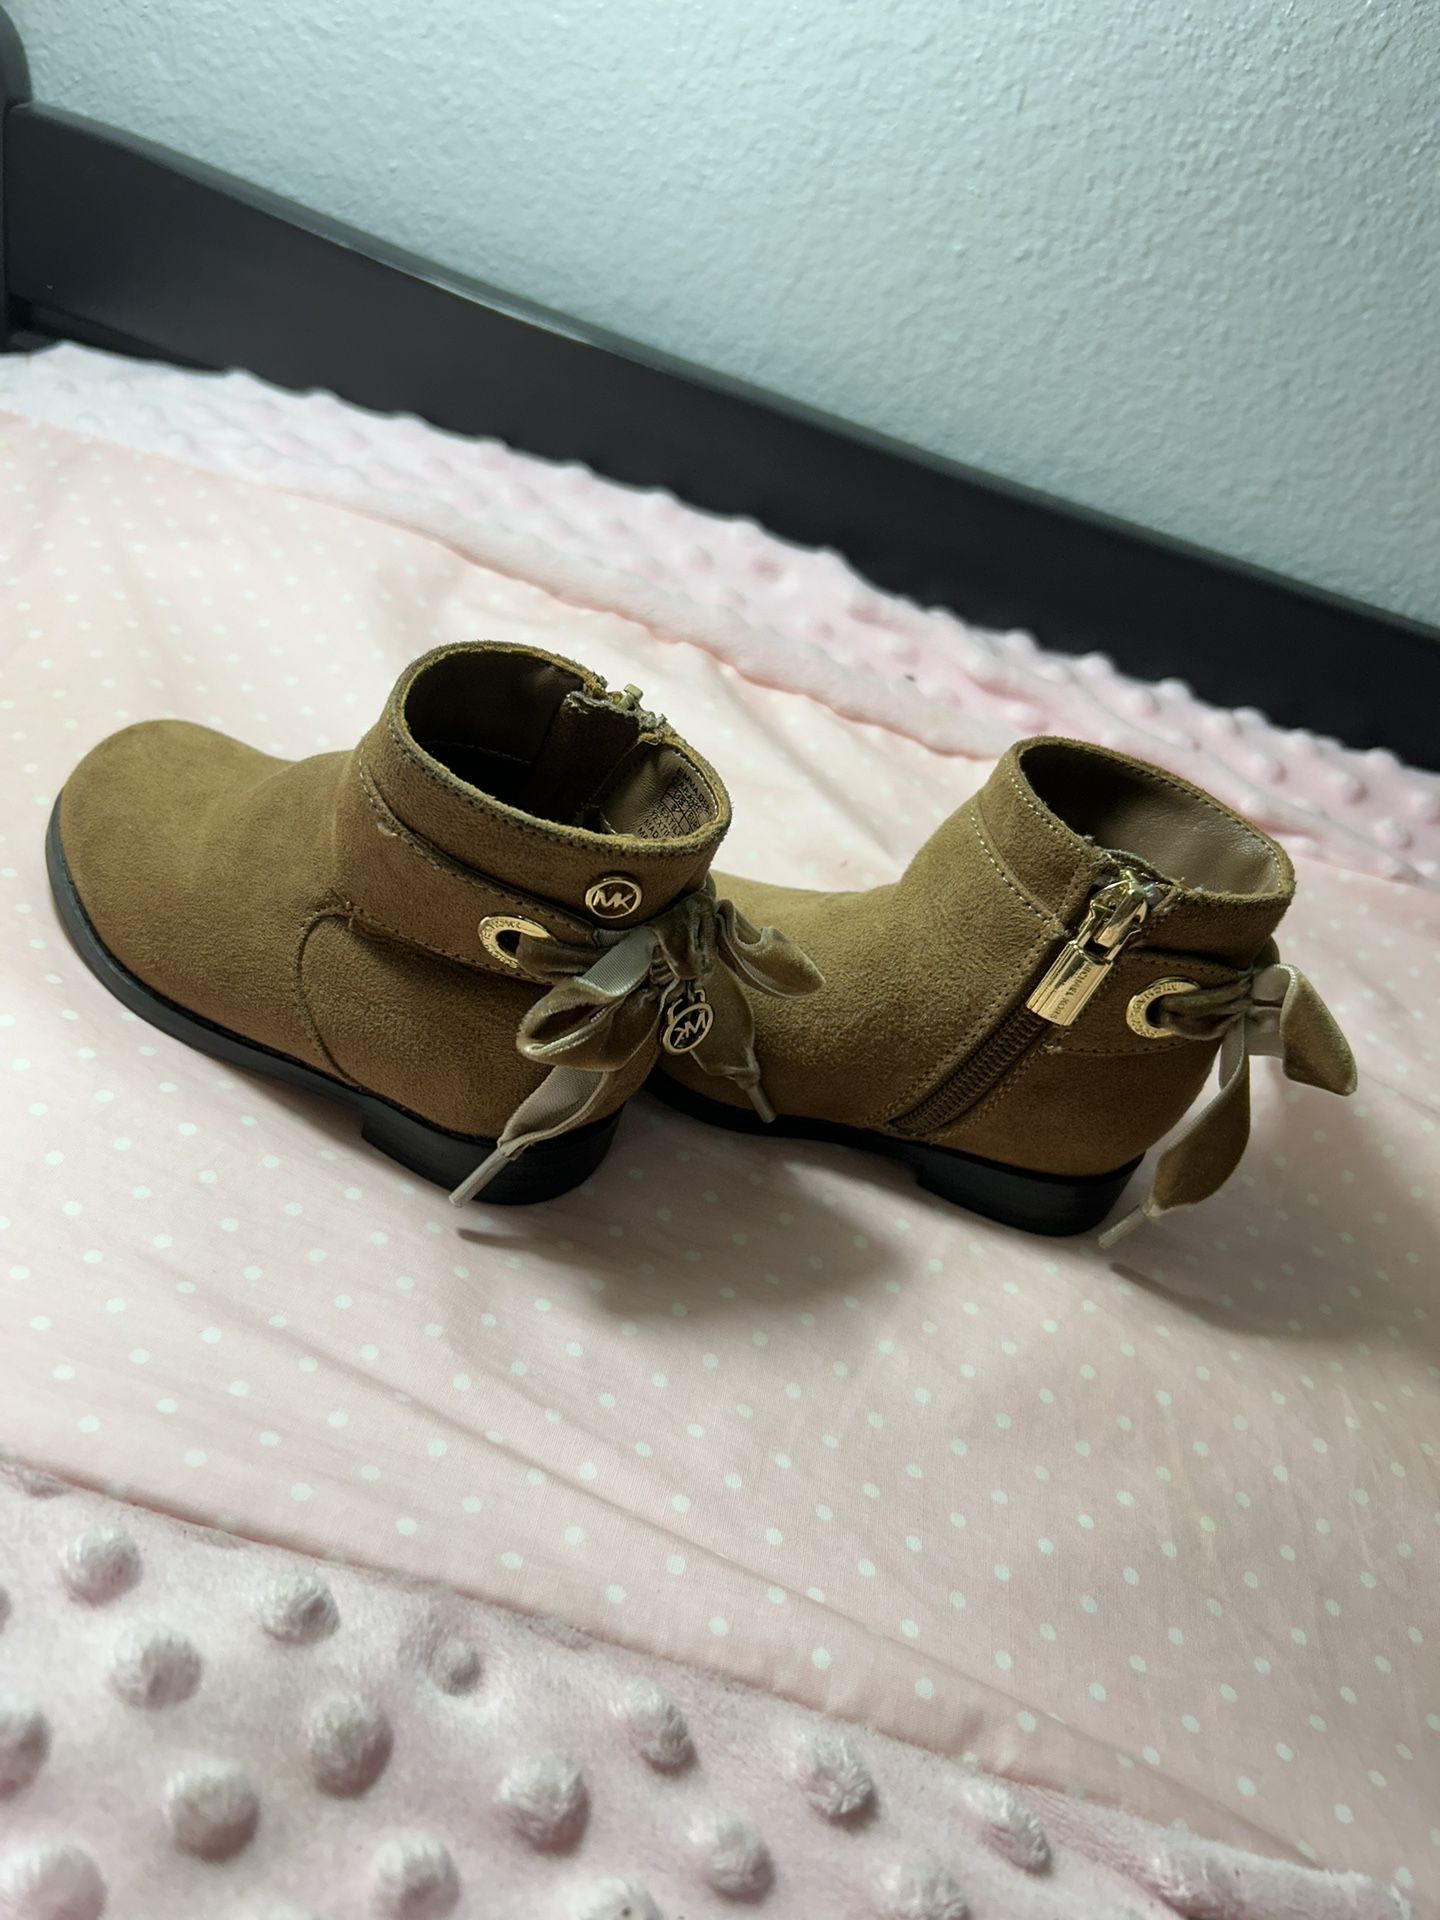 Michael Kors Baby Shoes